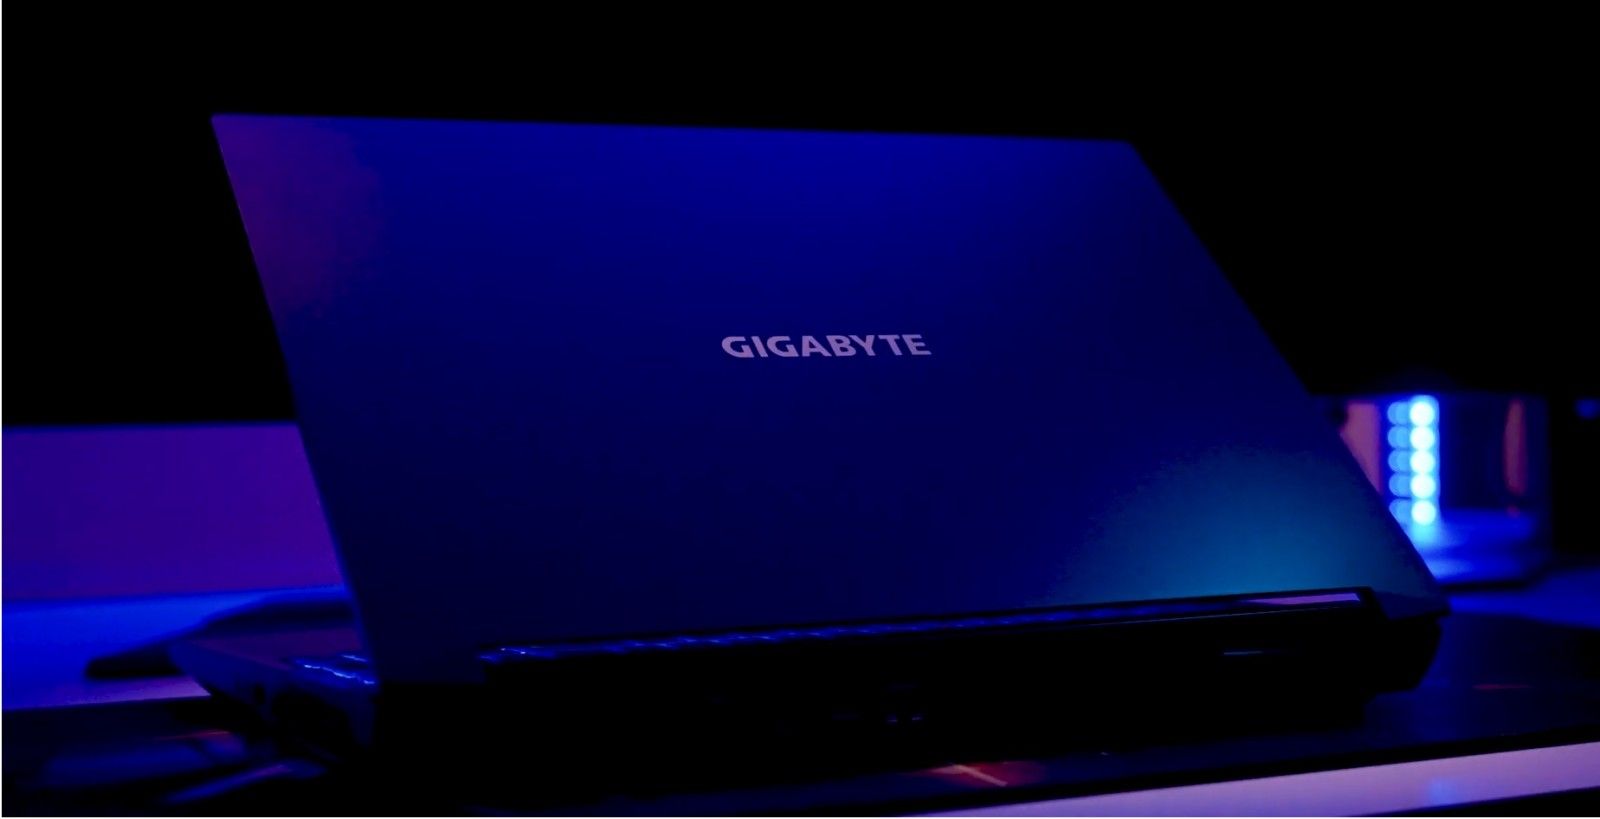 GIGABYTE Gaming laptop featured